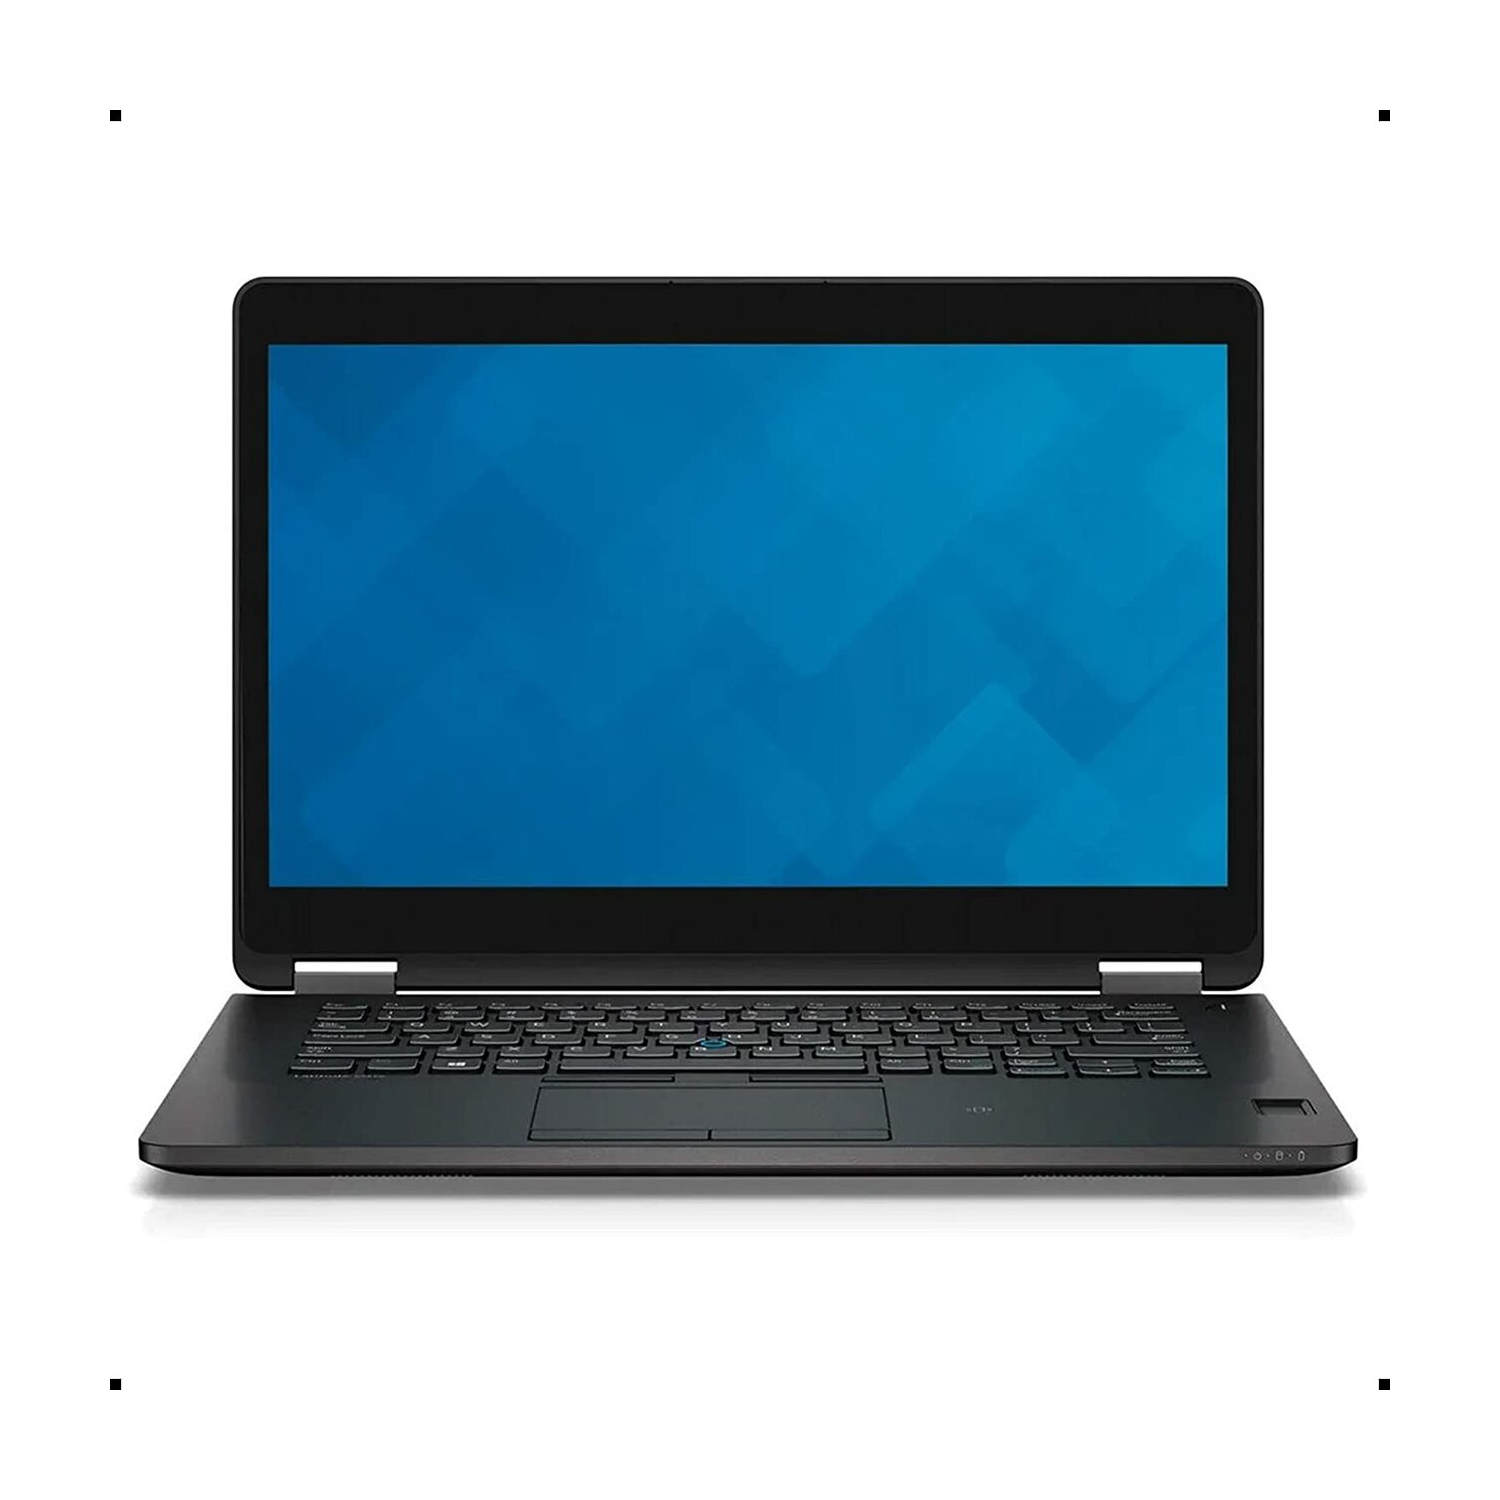 Dell Latitude E7470 14" QHD (2560 x 1440) Touchscreen Laptop, Core i5 6th Gen, 8GB DDR4, 256GB SSD, Windows 10 (Refurbished-Good)